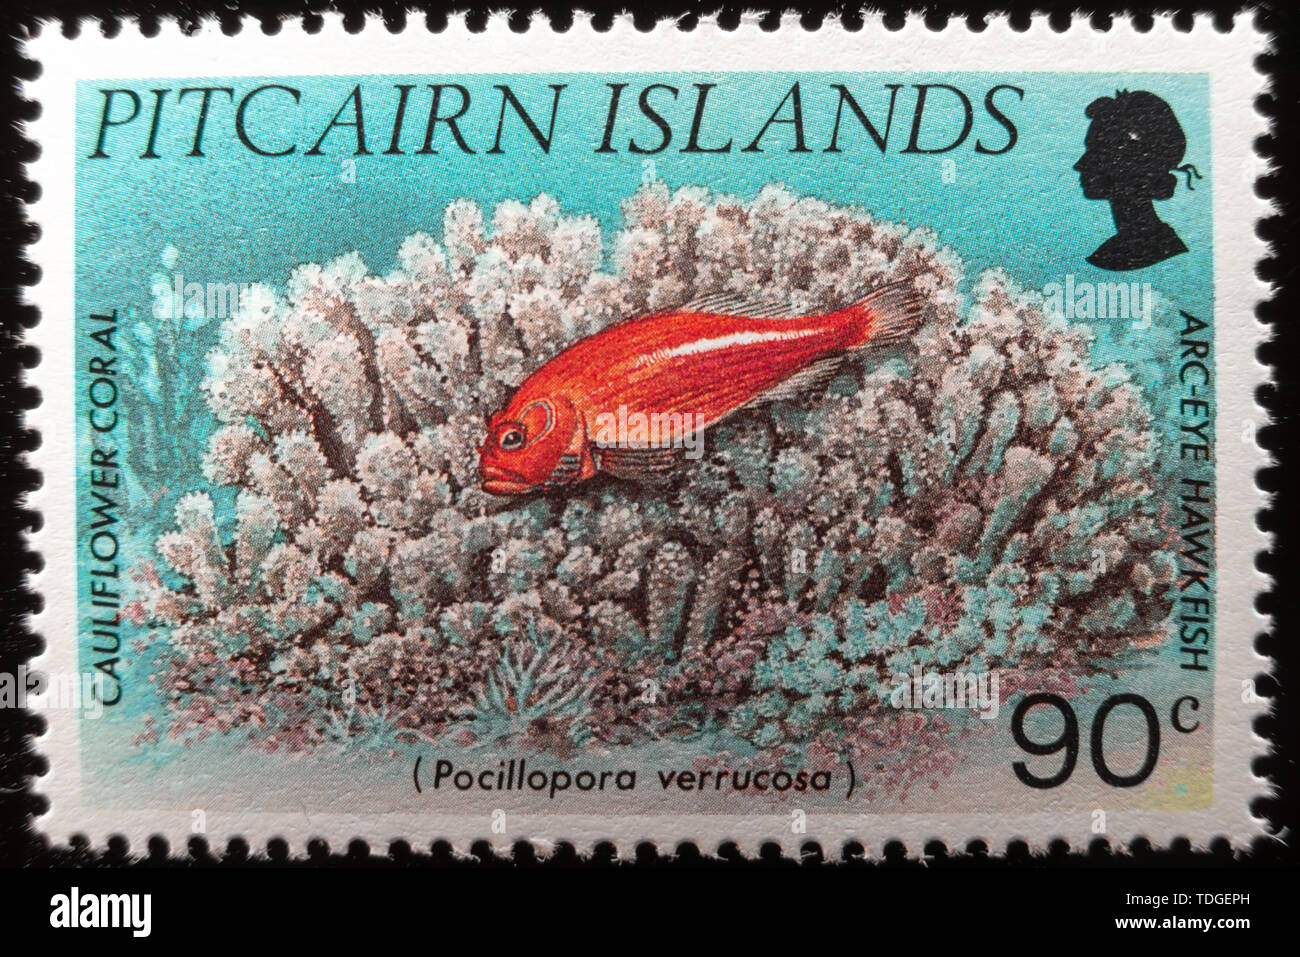 Ein Makro Bild eines commemorative Pitcairninseln 90 c 1994 Korallen Stempel Stockfoto